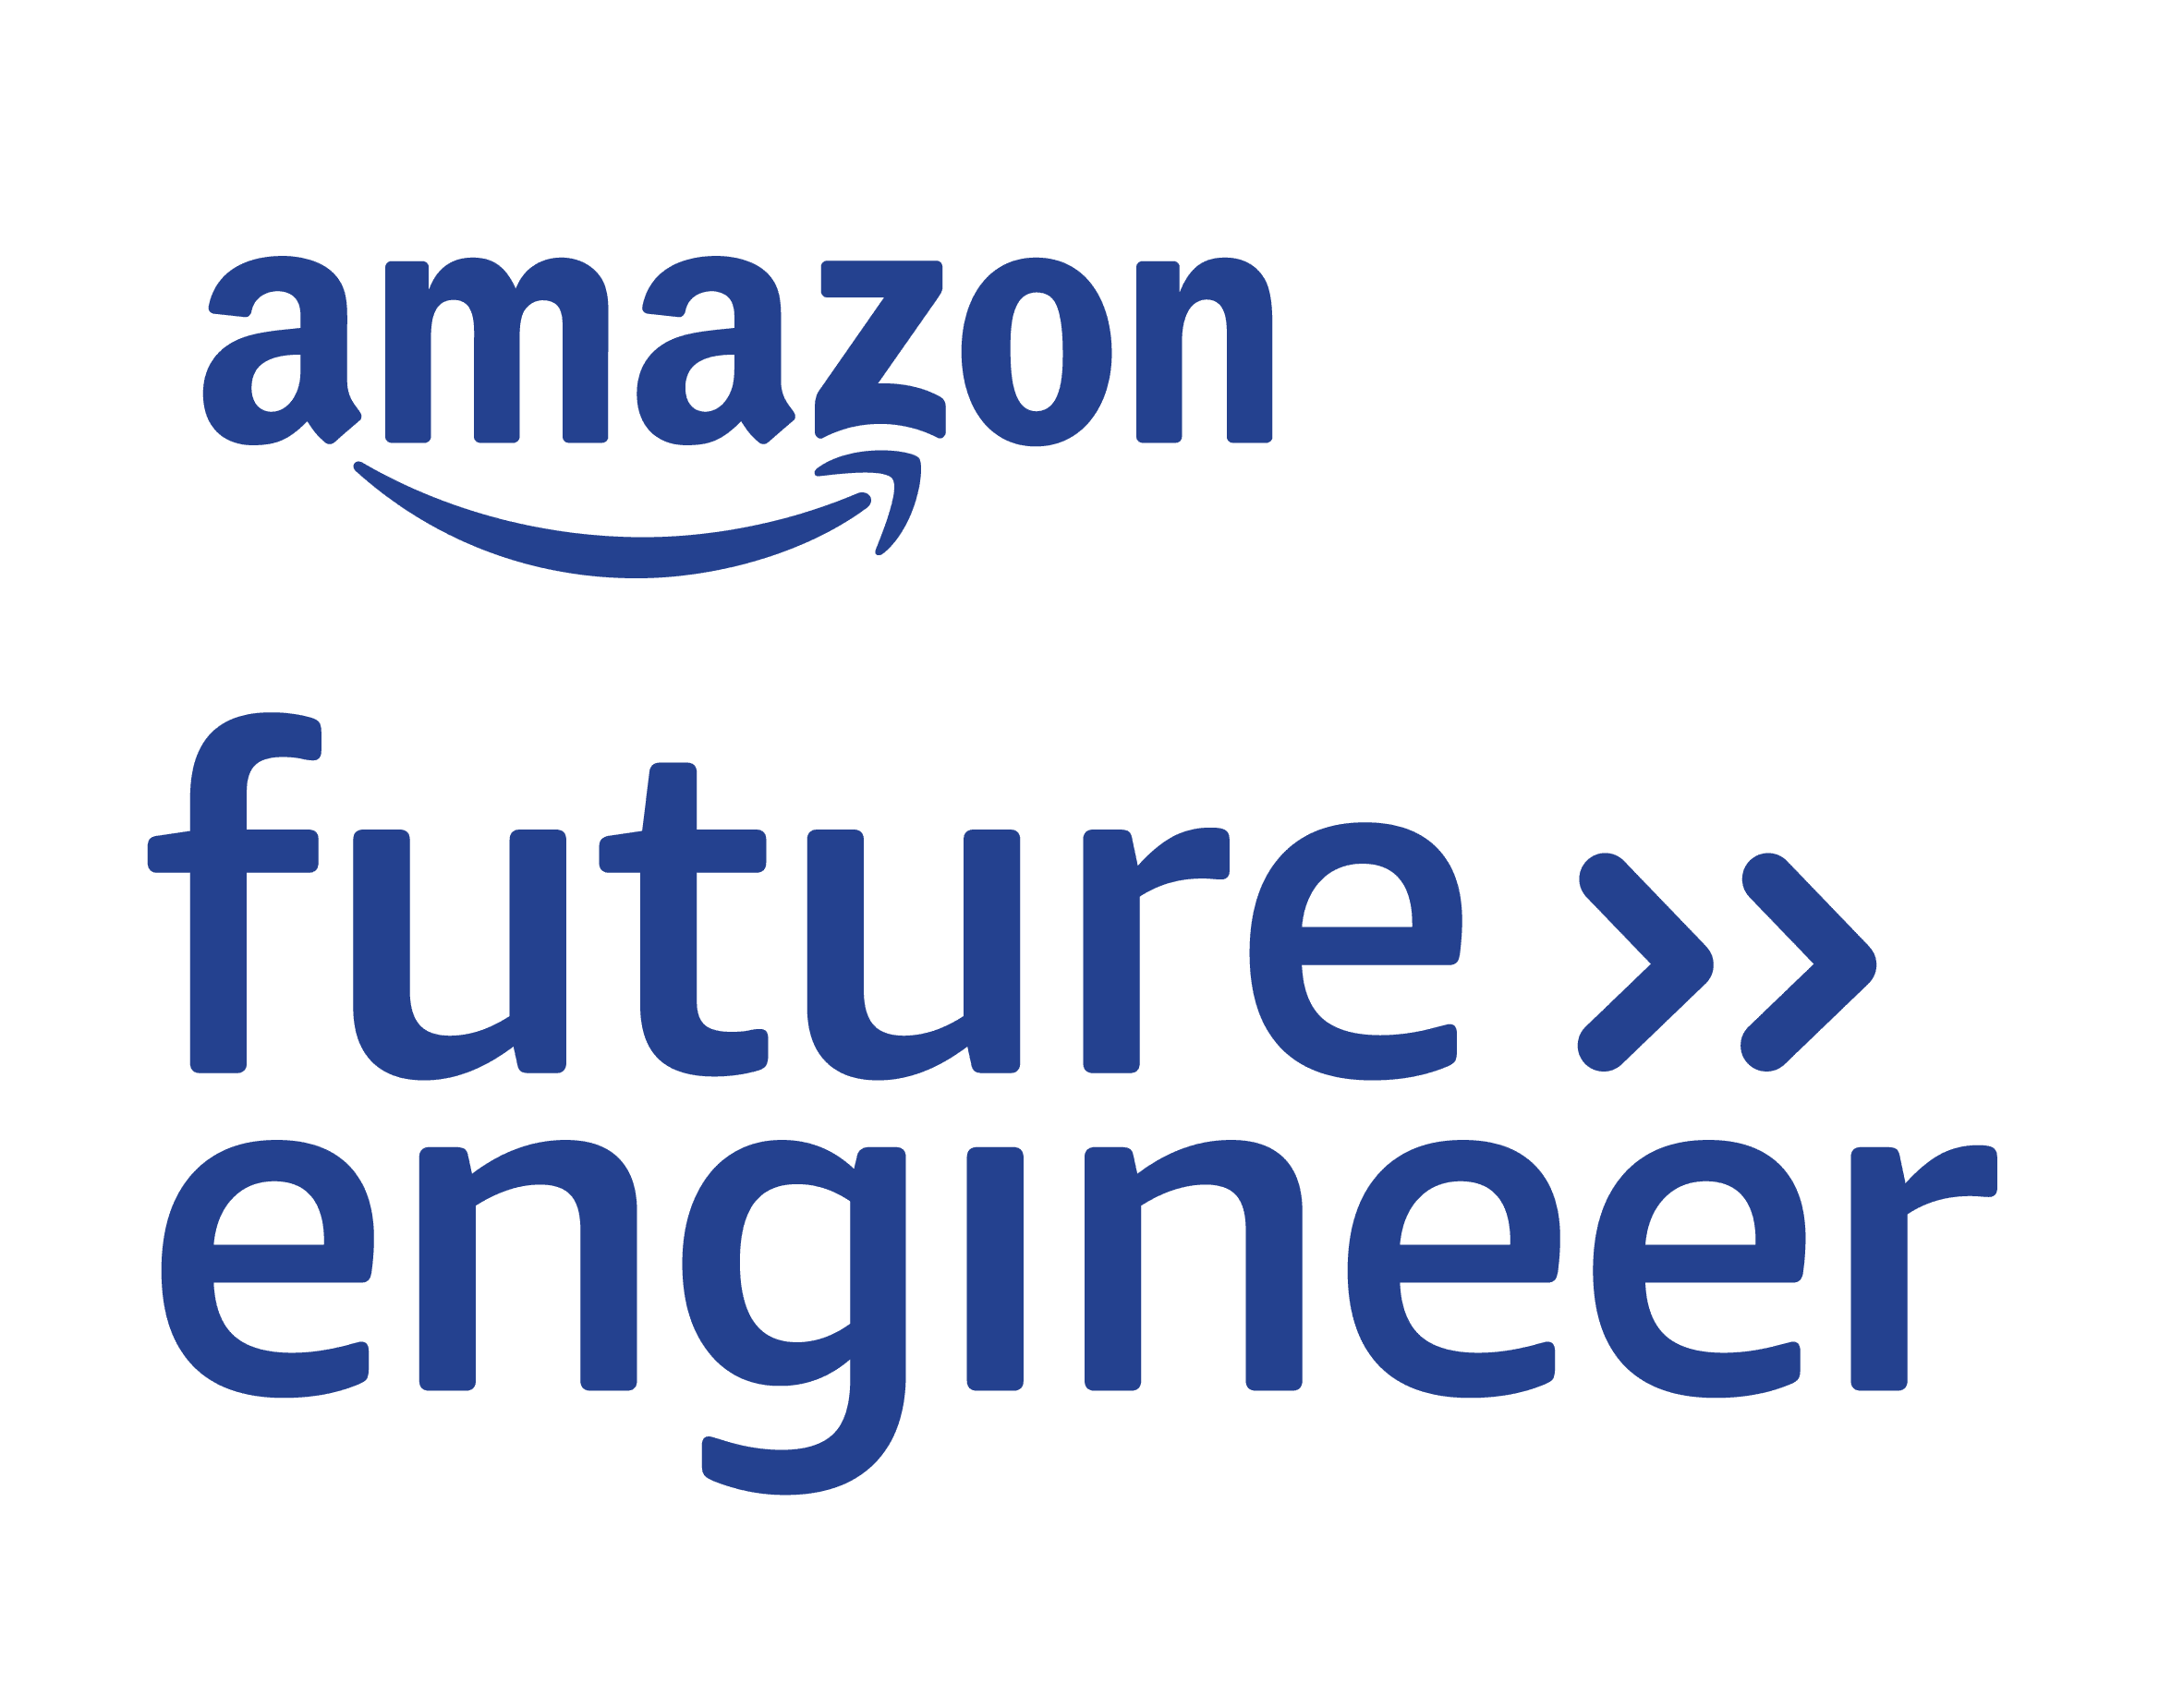 Amazon future engineer logo